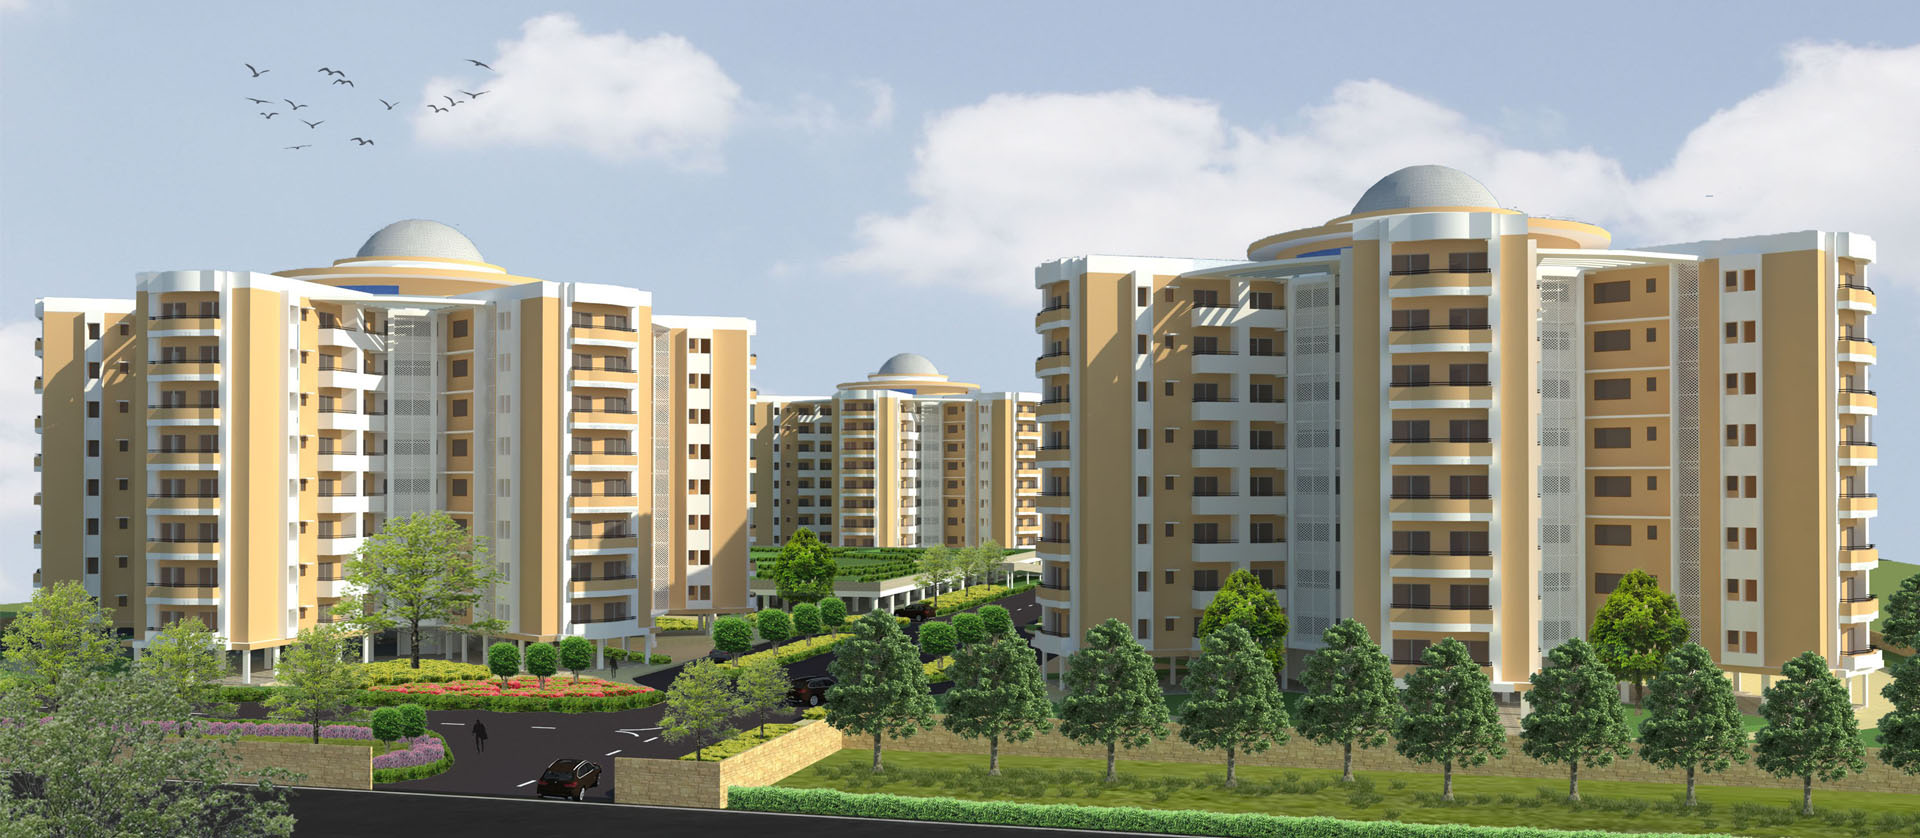 Multi-Storey Housing: Kirandul Township, Chhattisgarh